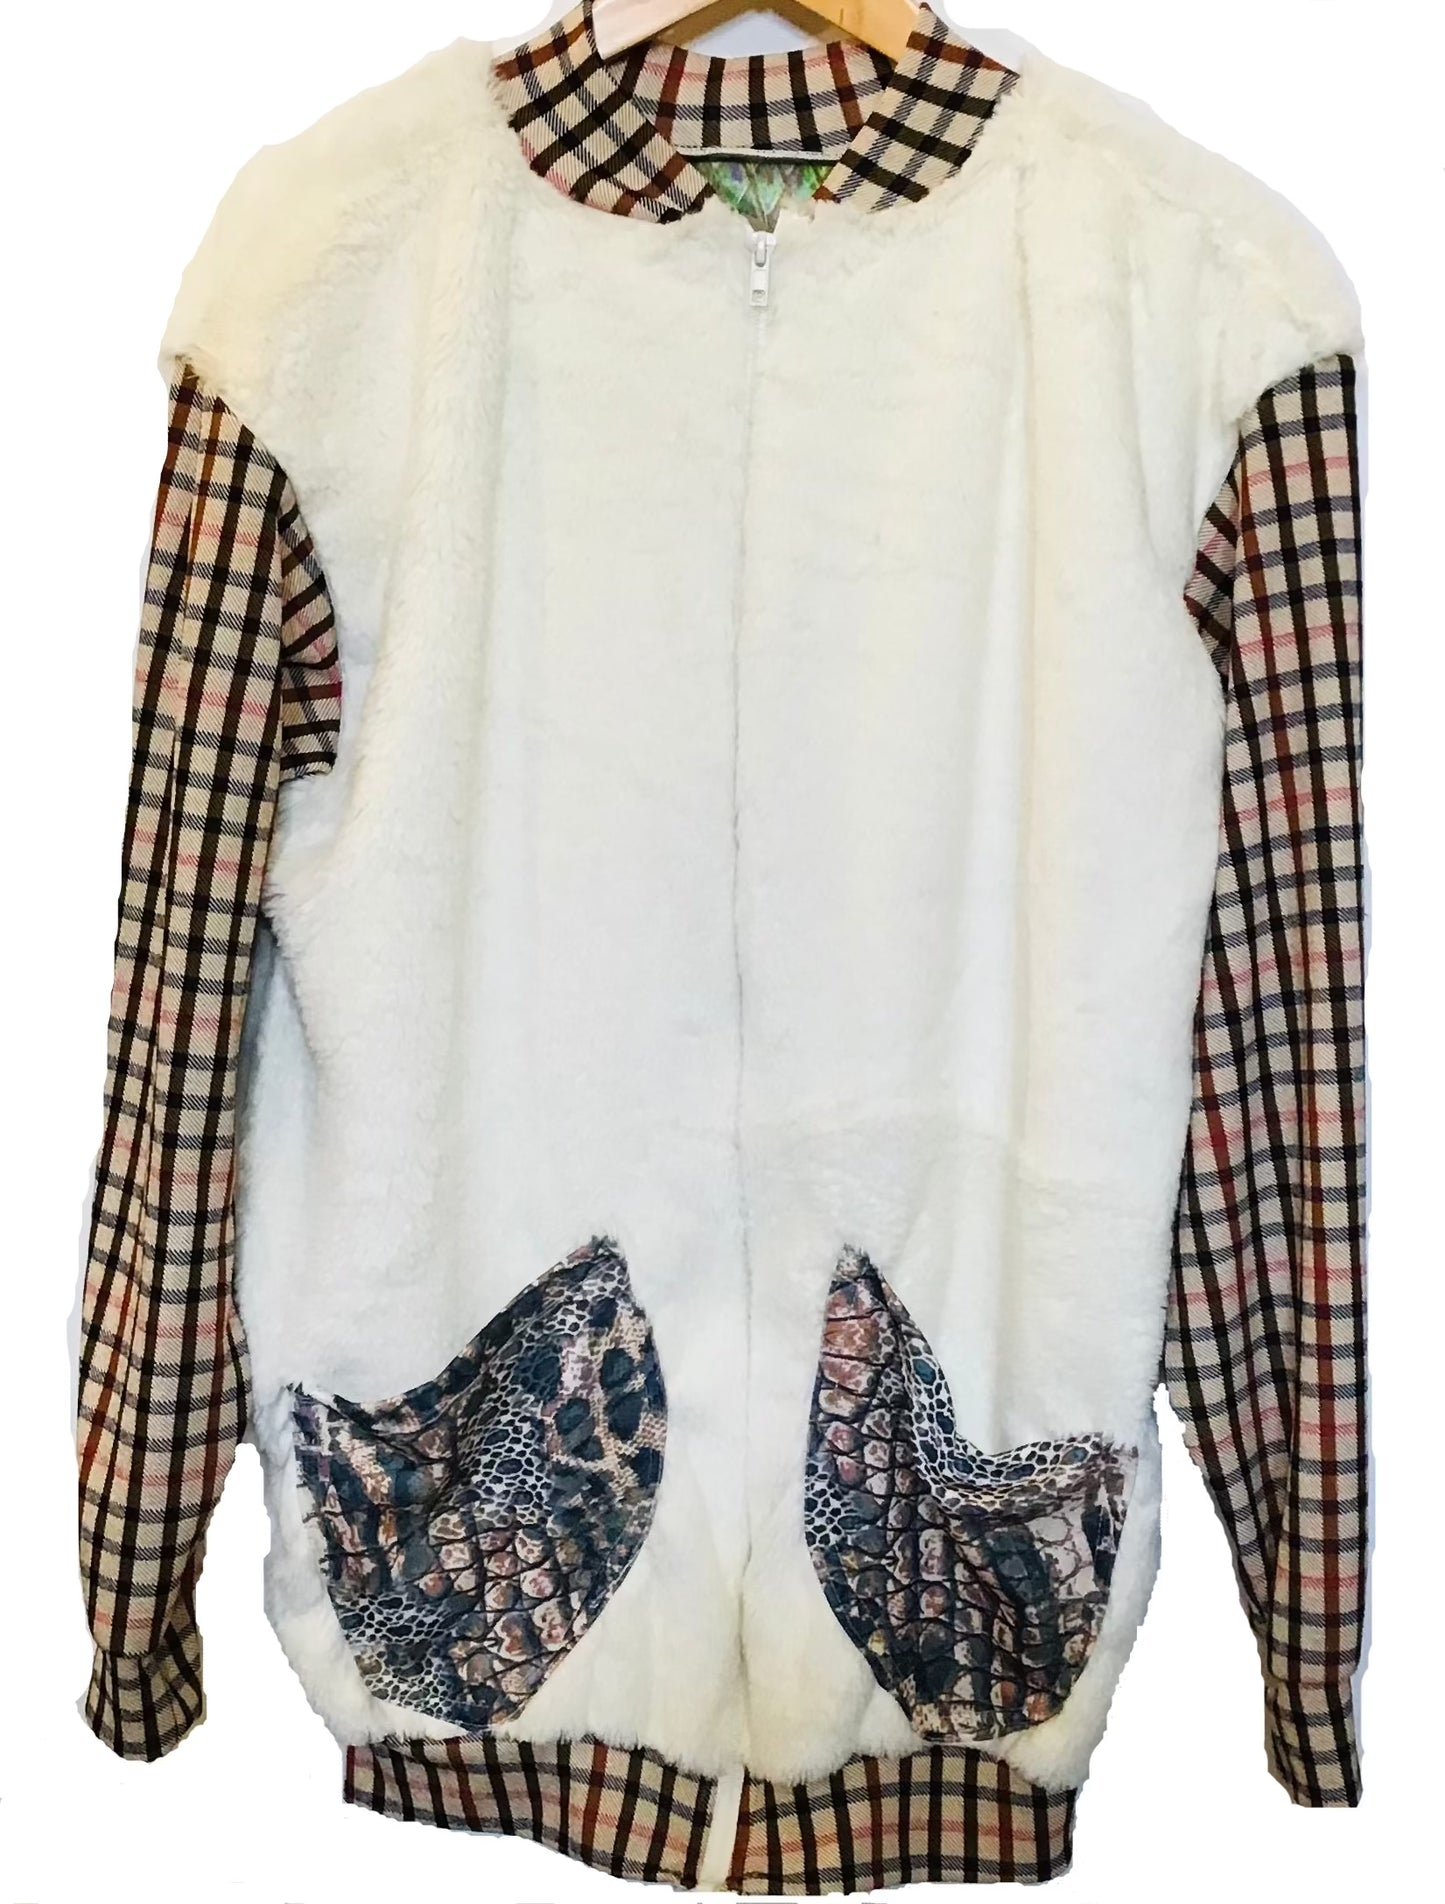 Matsinhe Crafts Handmade Bomber Jacket (Men's Size XL)